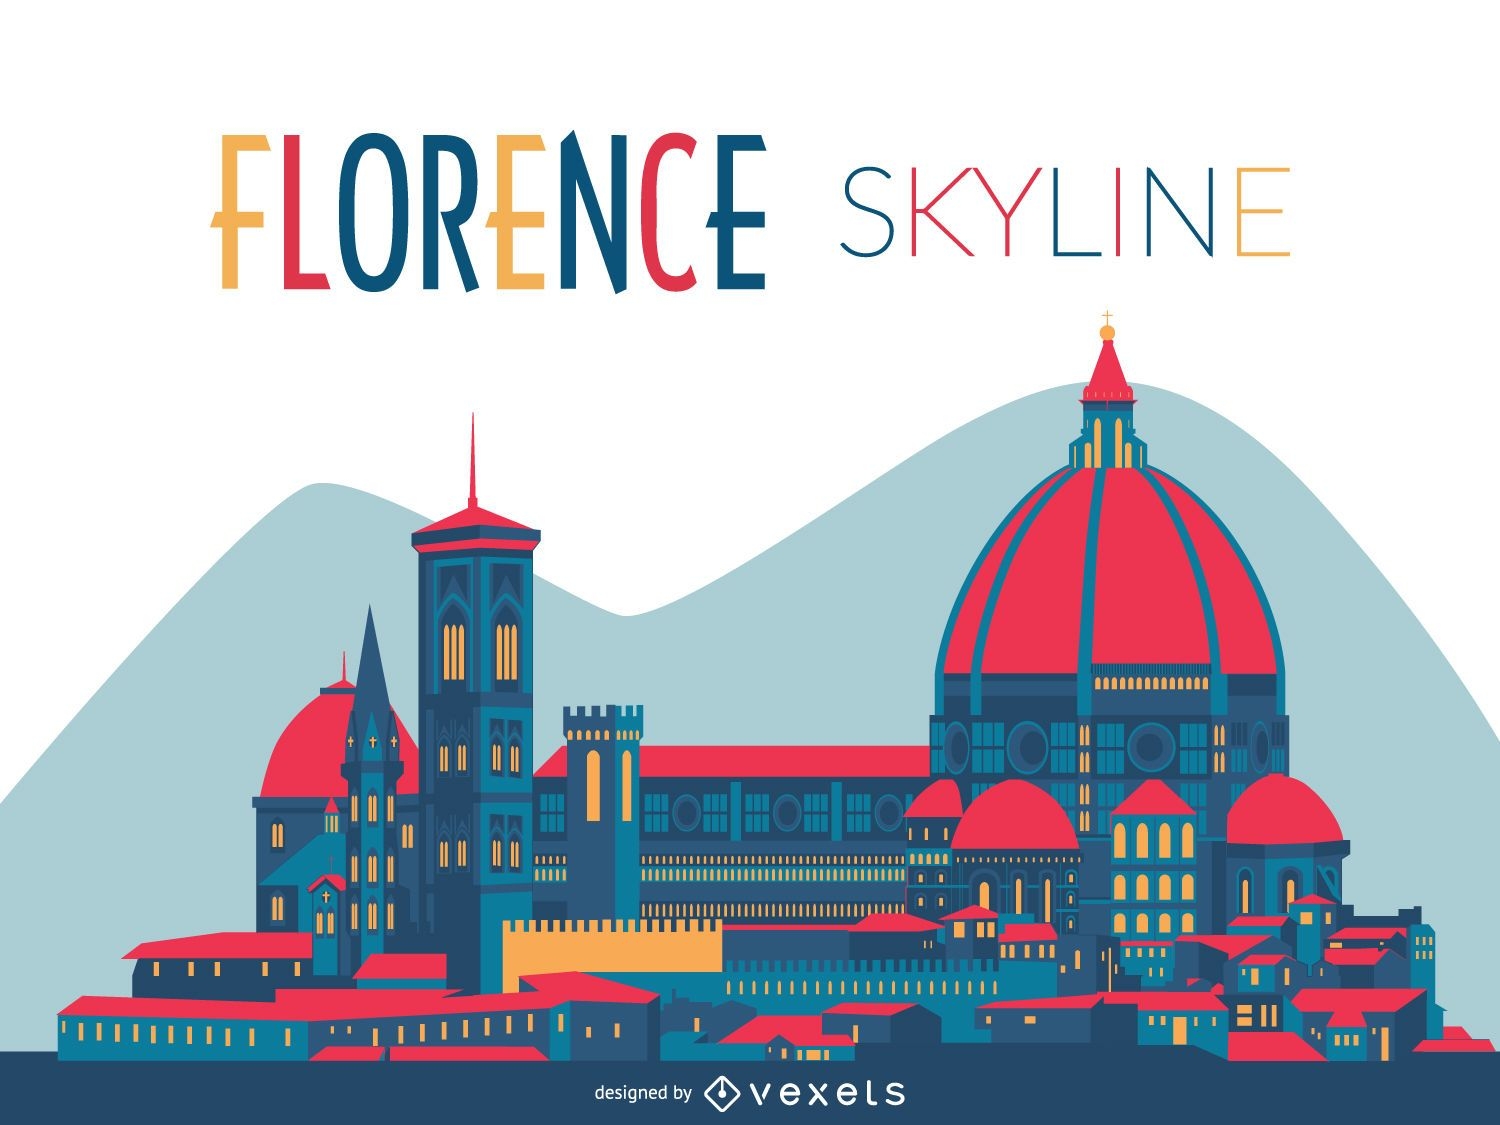 Florence skyline silhouette